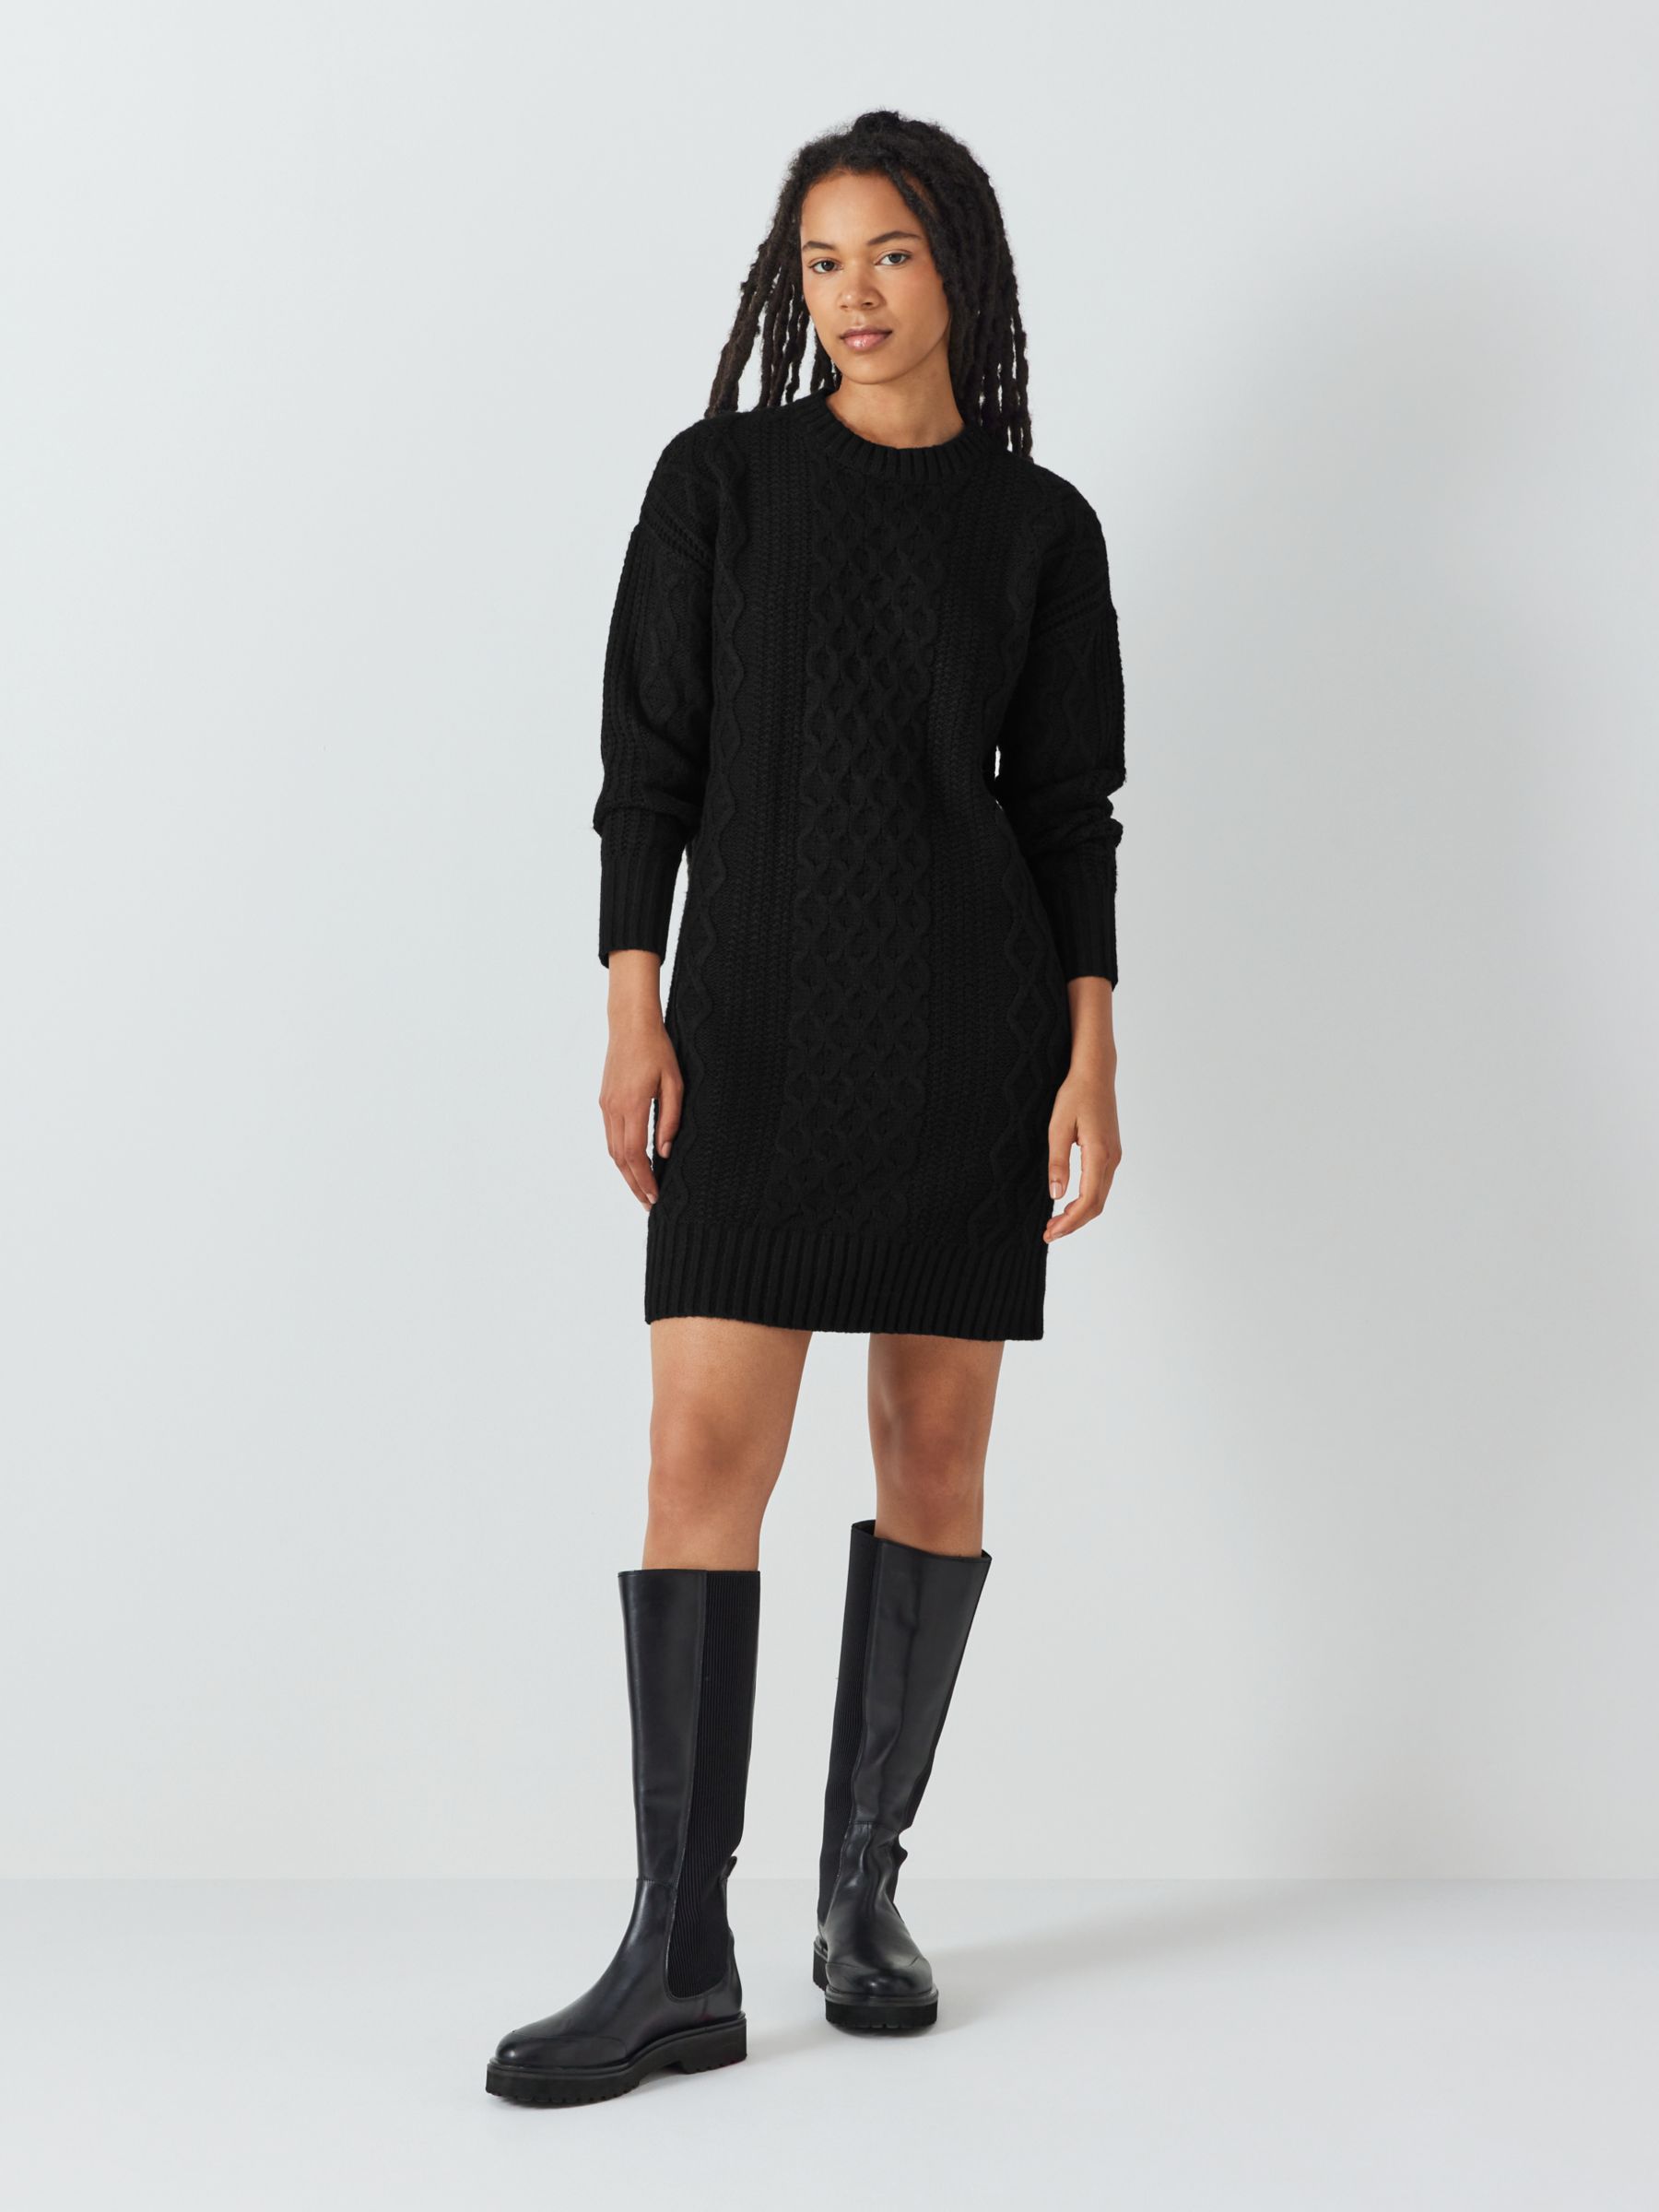 John Lewis ANYDAY Plain Cable Knit Jumper Dress, Black, XS